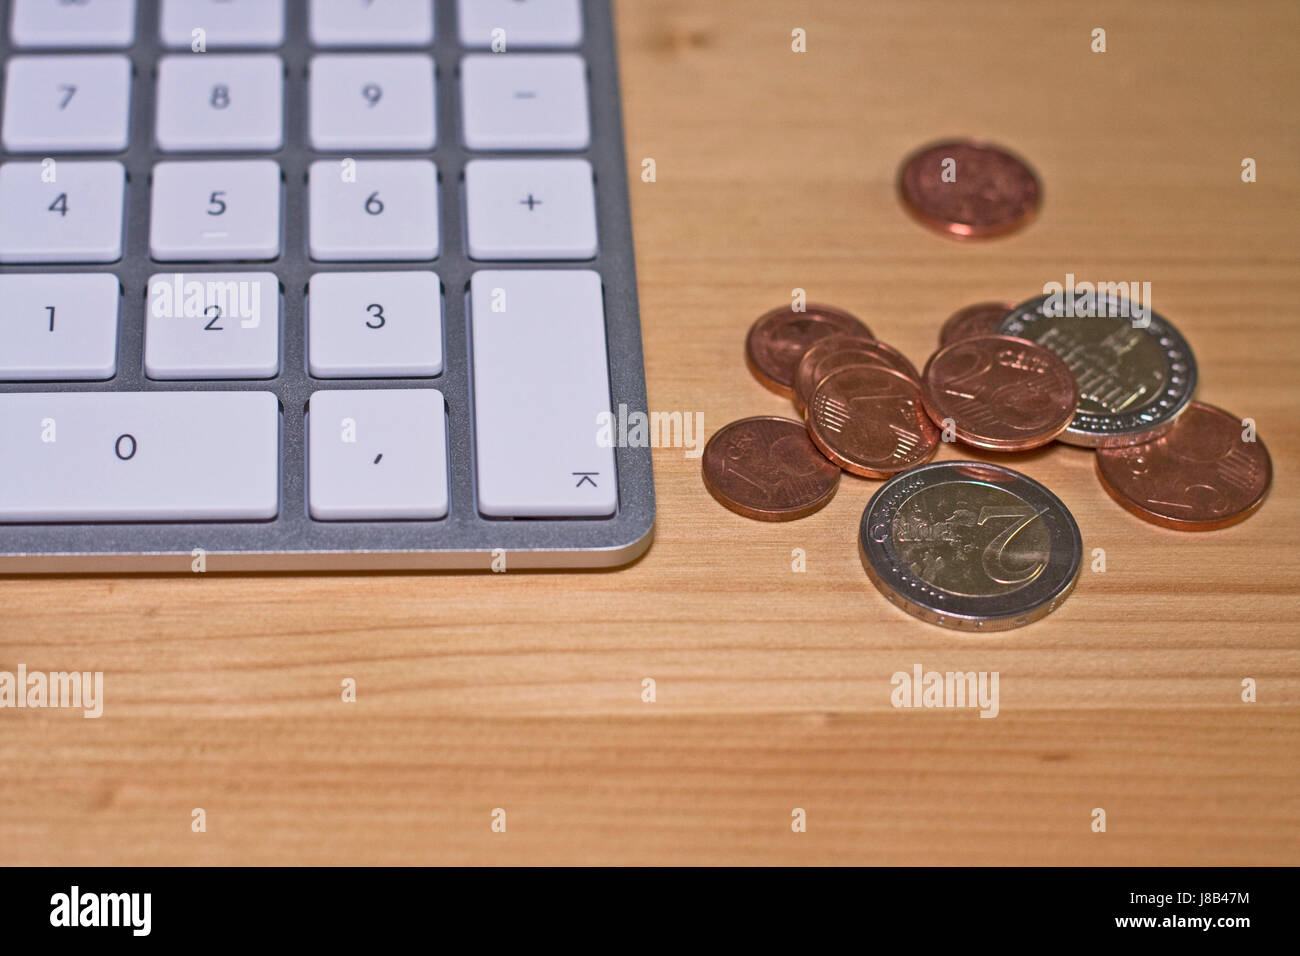 keyboard, euro, currency, coin, key, pay, wood, save, horizontal, shopping, Stock Photo